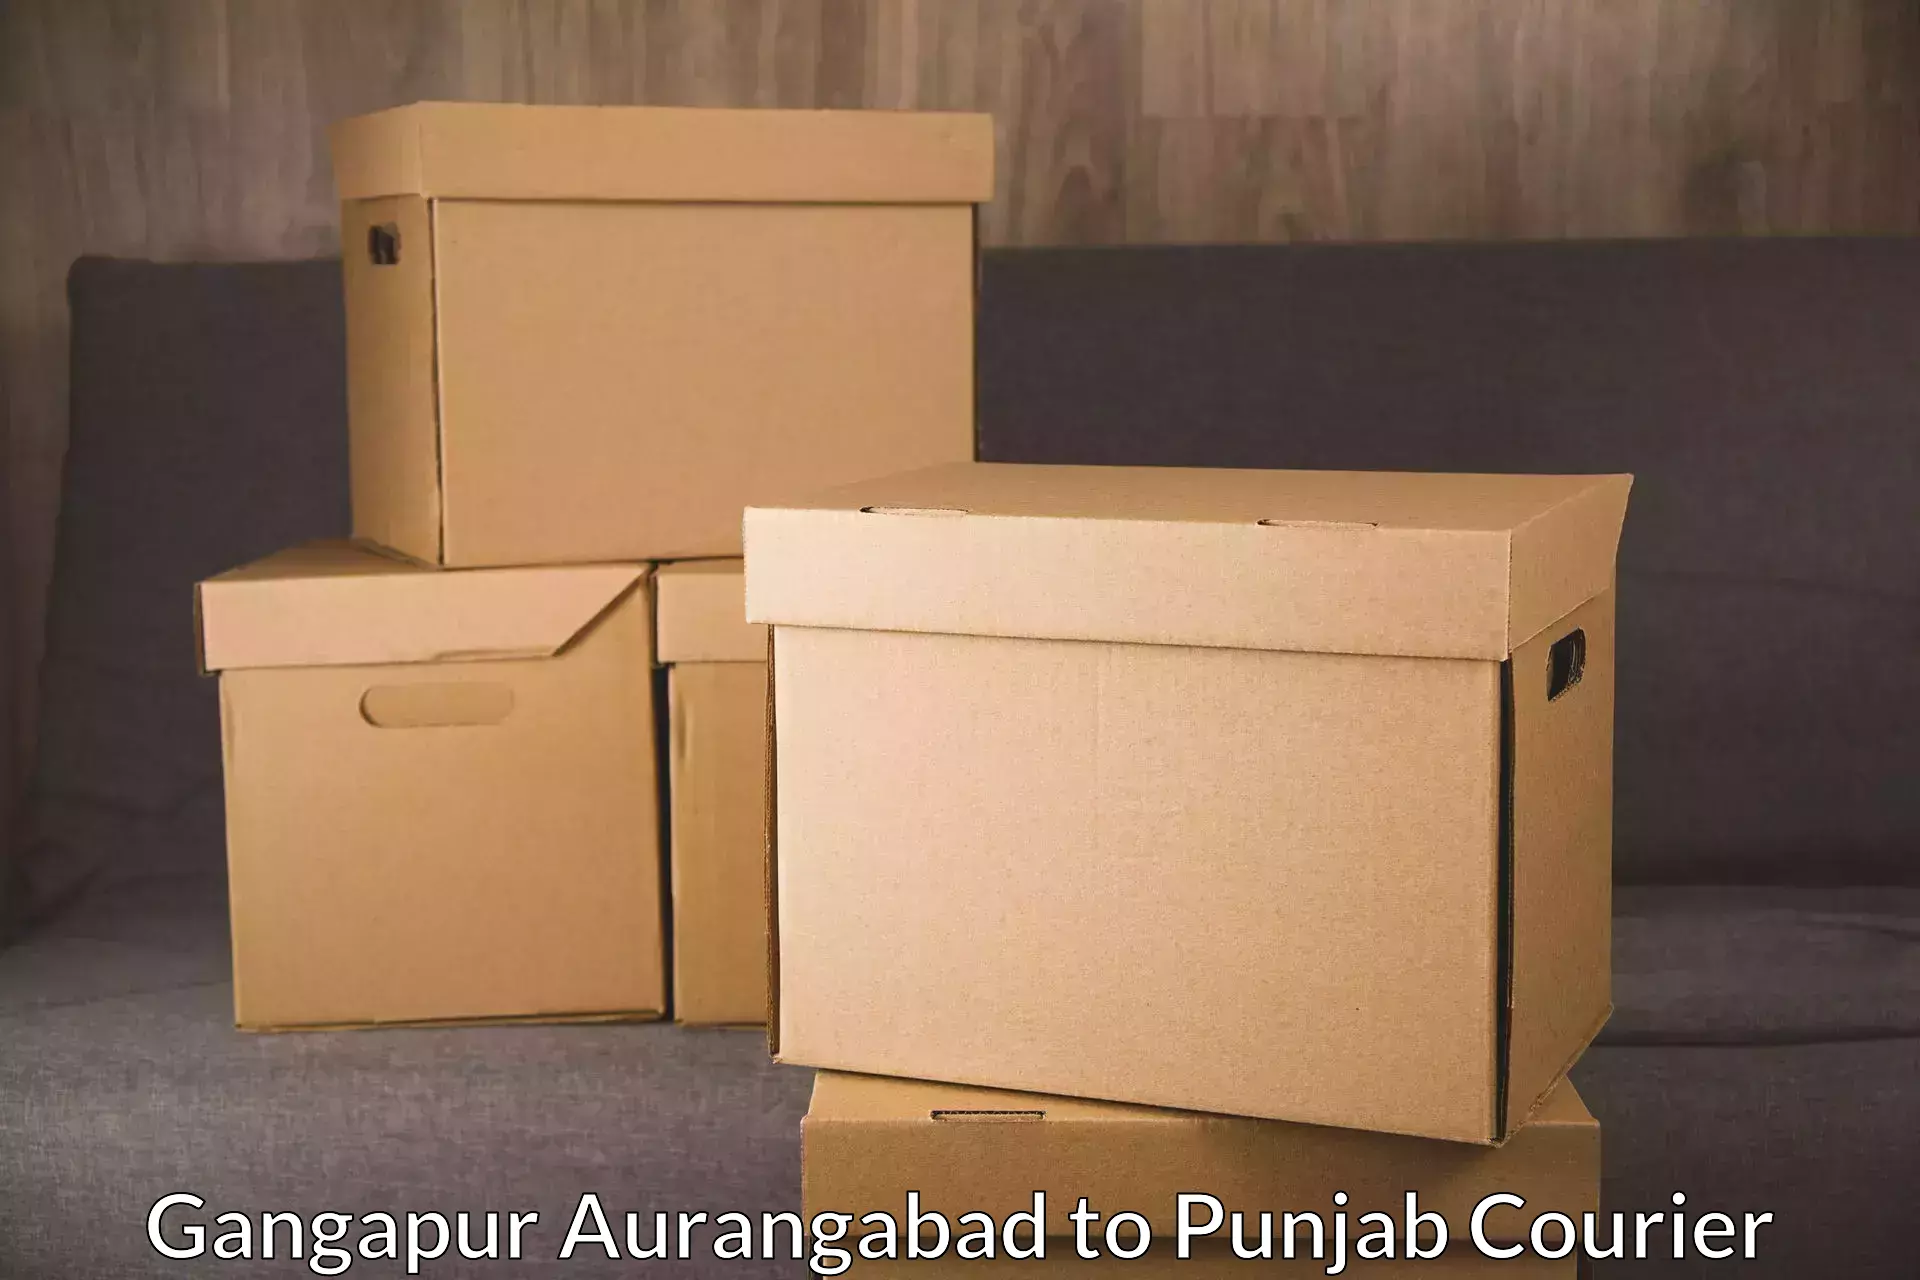 Urgent courier needs Gangapur Aurangabad to Ludhiana